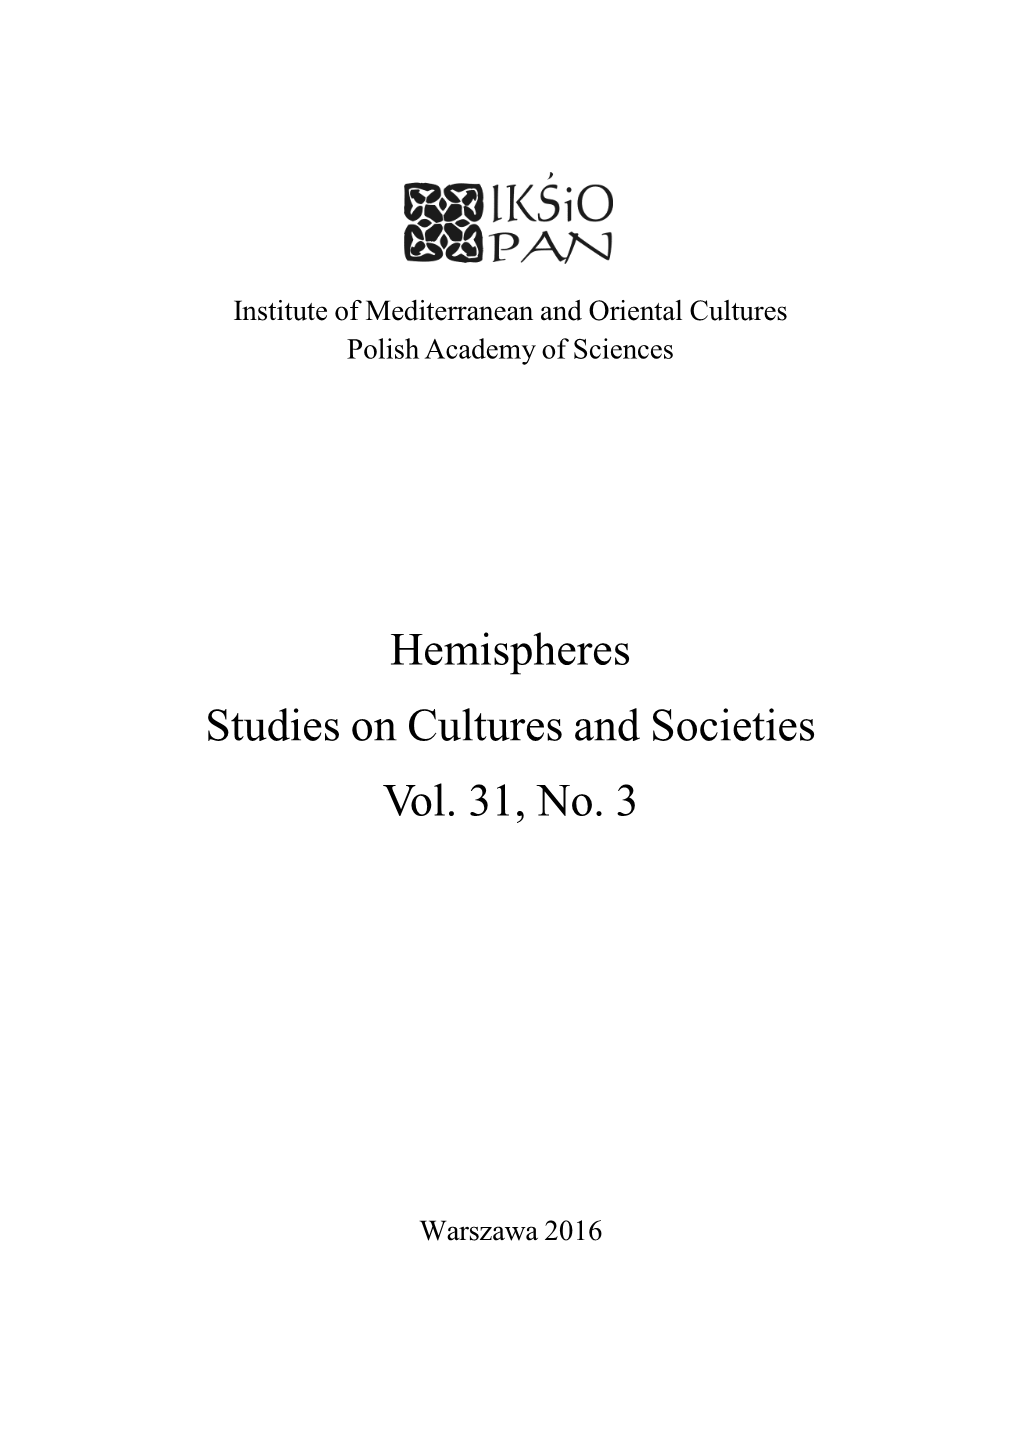 Hemispheres Studies on Cultures and Societies Vol. 31, No. 3